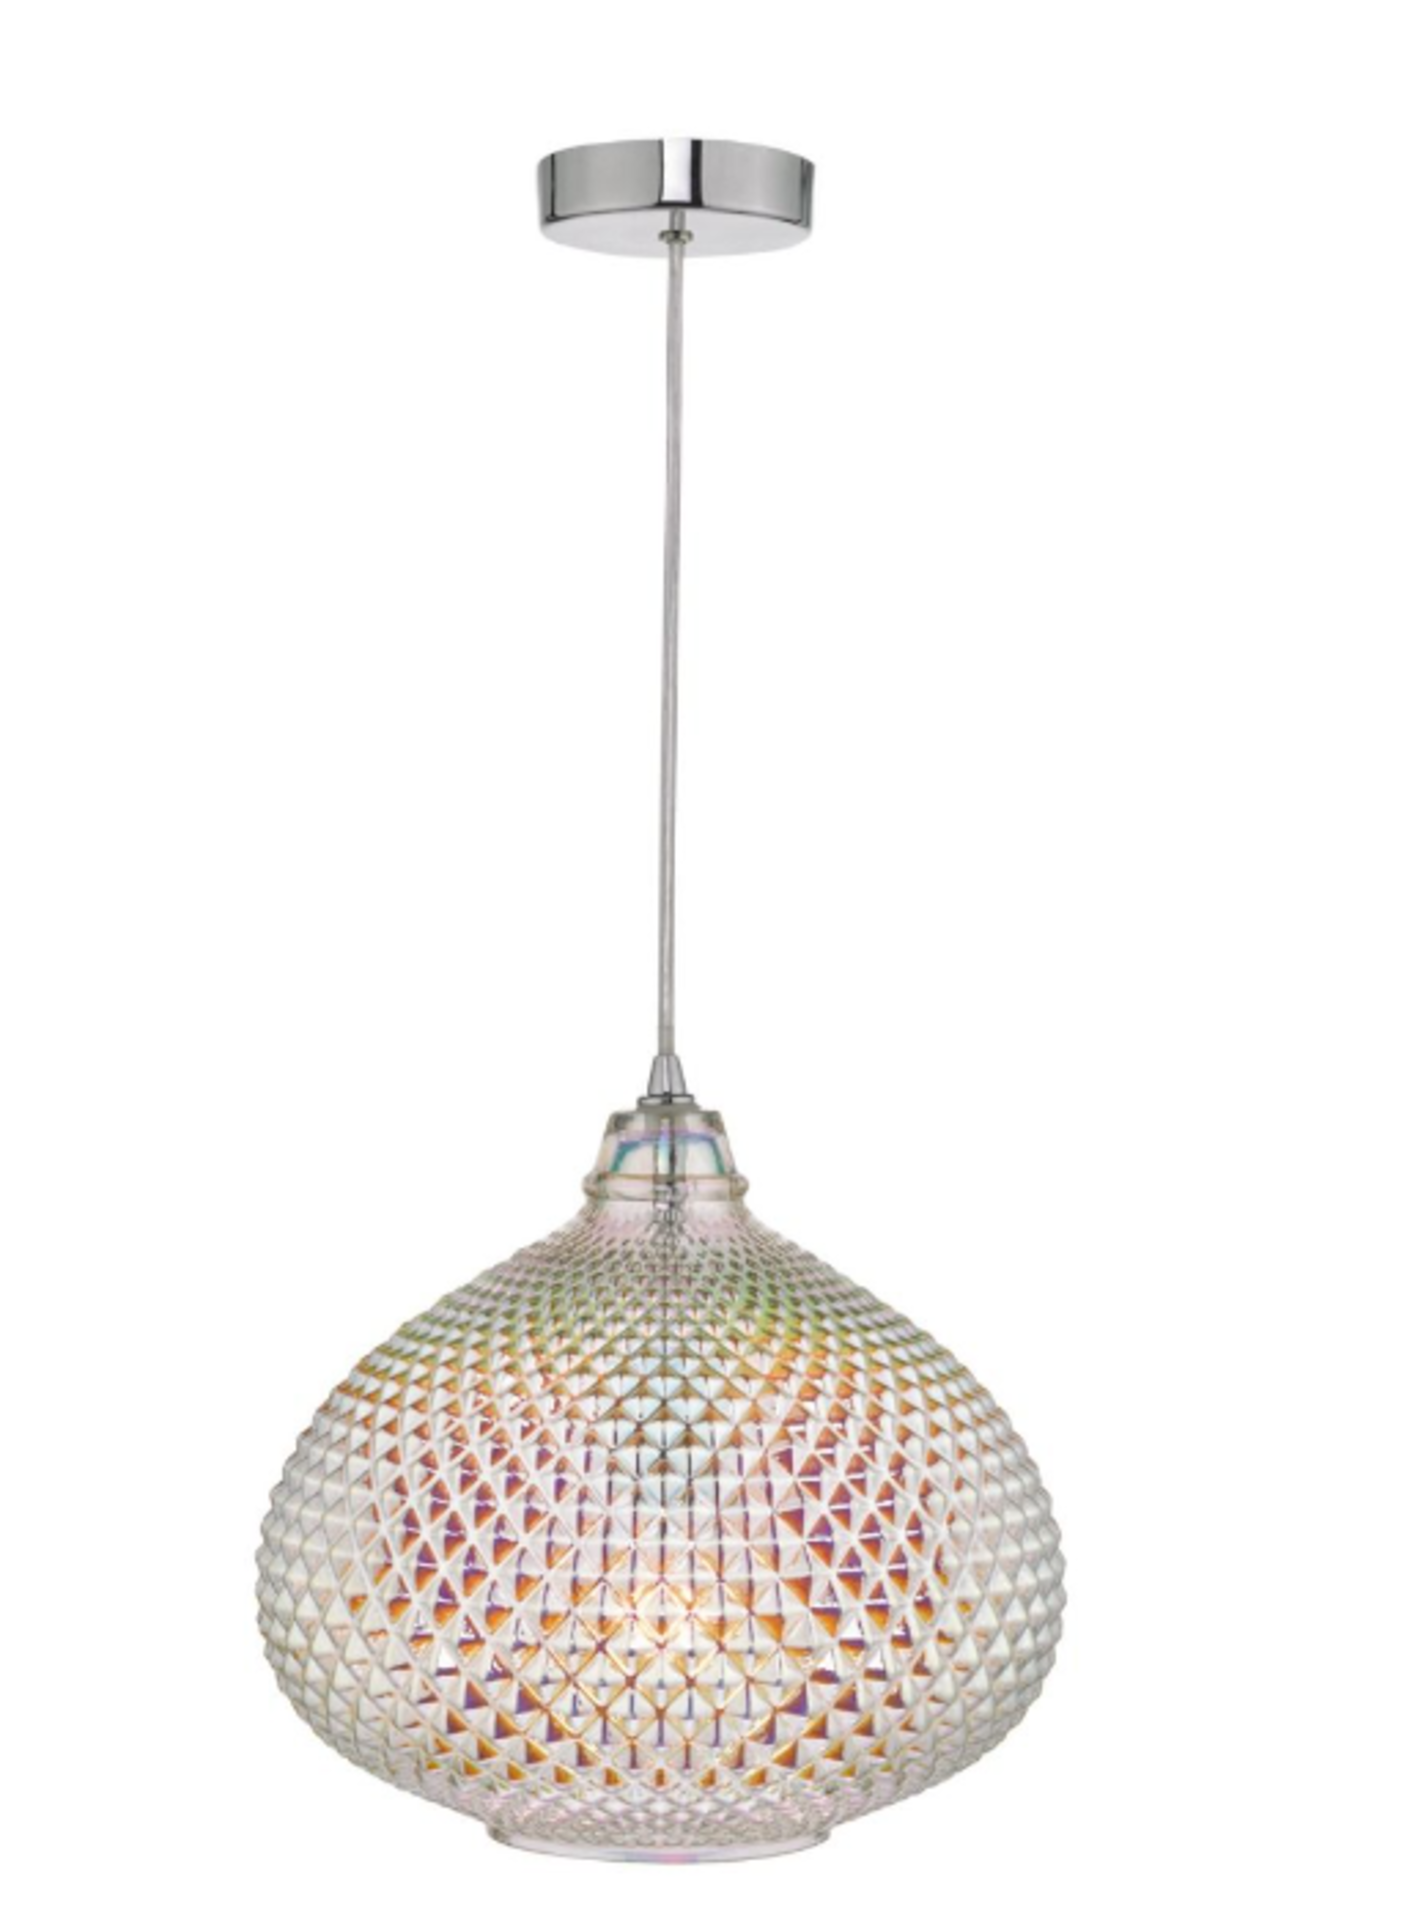 Roisin Pendant Glass & Polished Chrome. RRP £155.00. - SR4. When lit, this stunning ceiling light